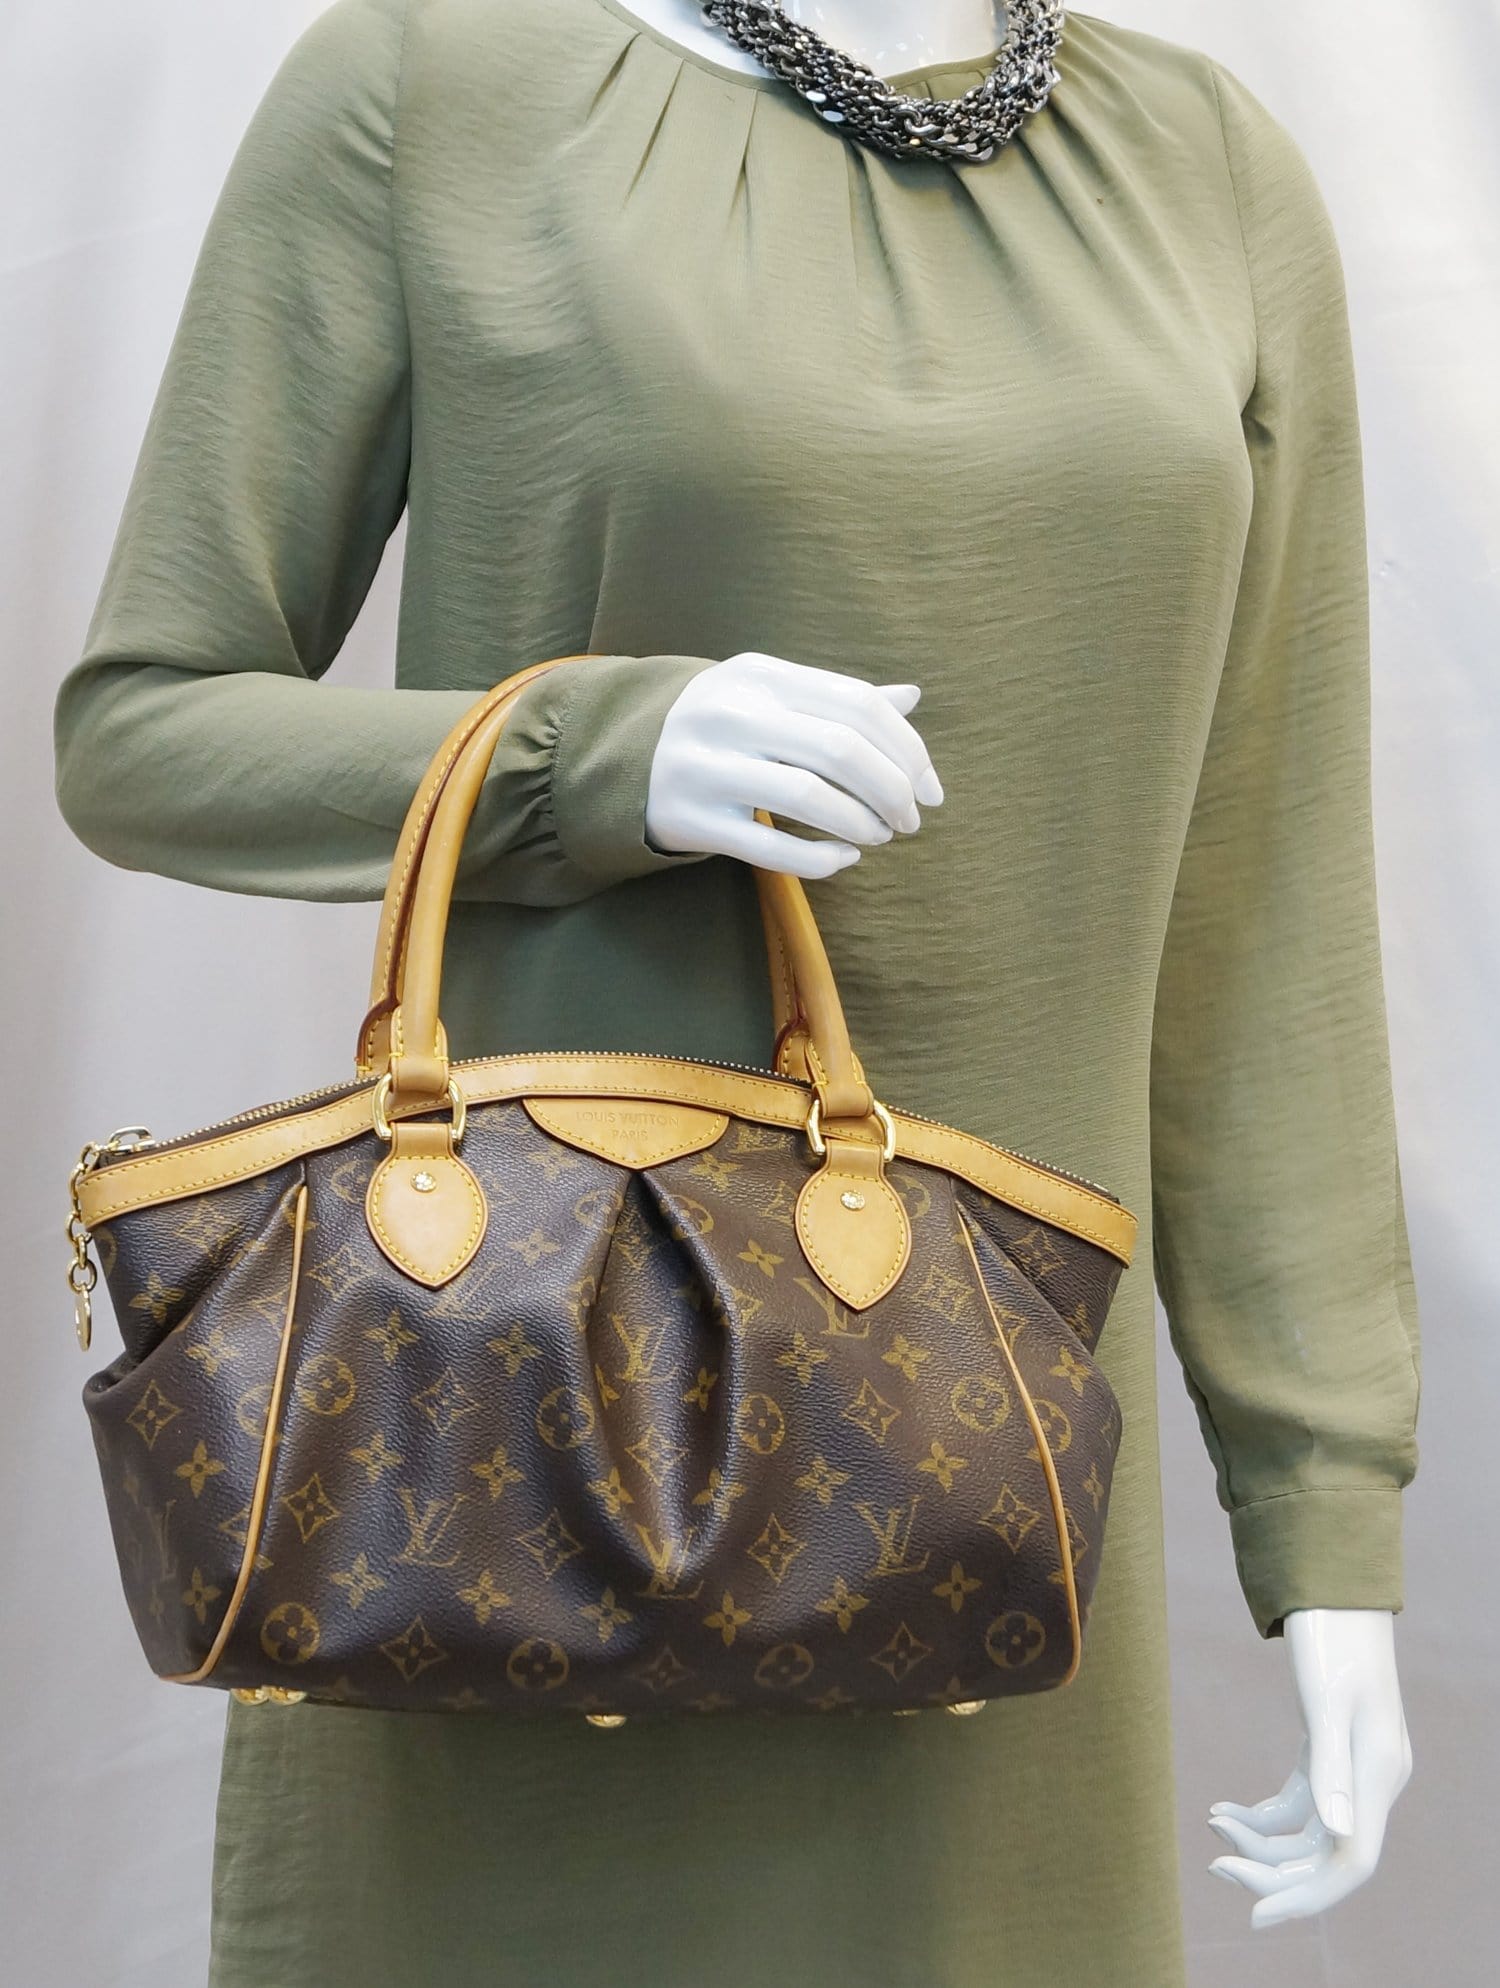 Tivoli - Hand - Bag - Louis - PM - Vuitton - Monogram - Louis Vuitton  Jasmin handbag in yellow epi leather - Bag - Shoulder - M40143 –  Inspirational Debut With Louis Vuitton